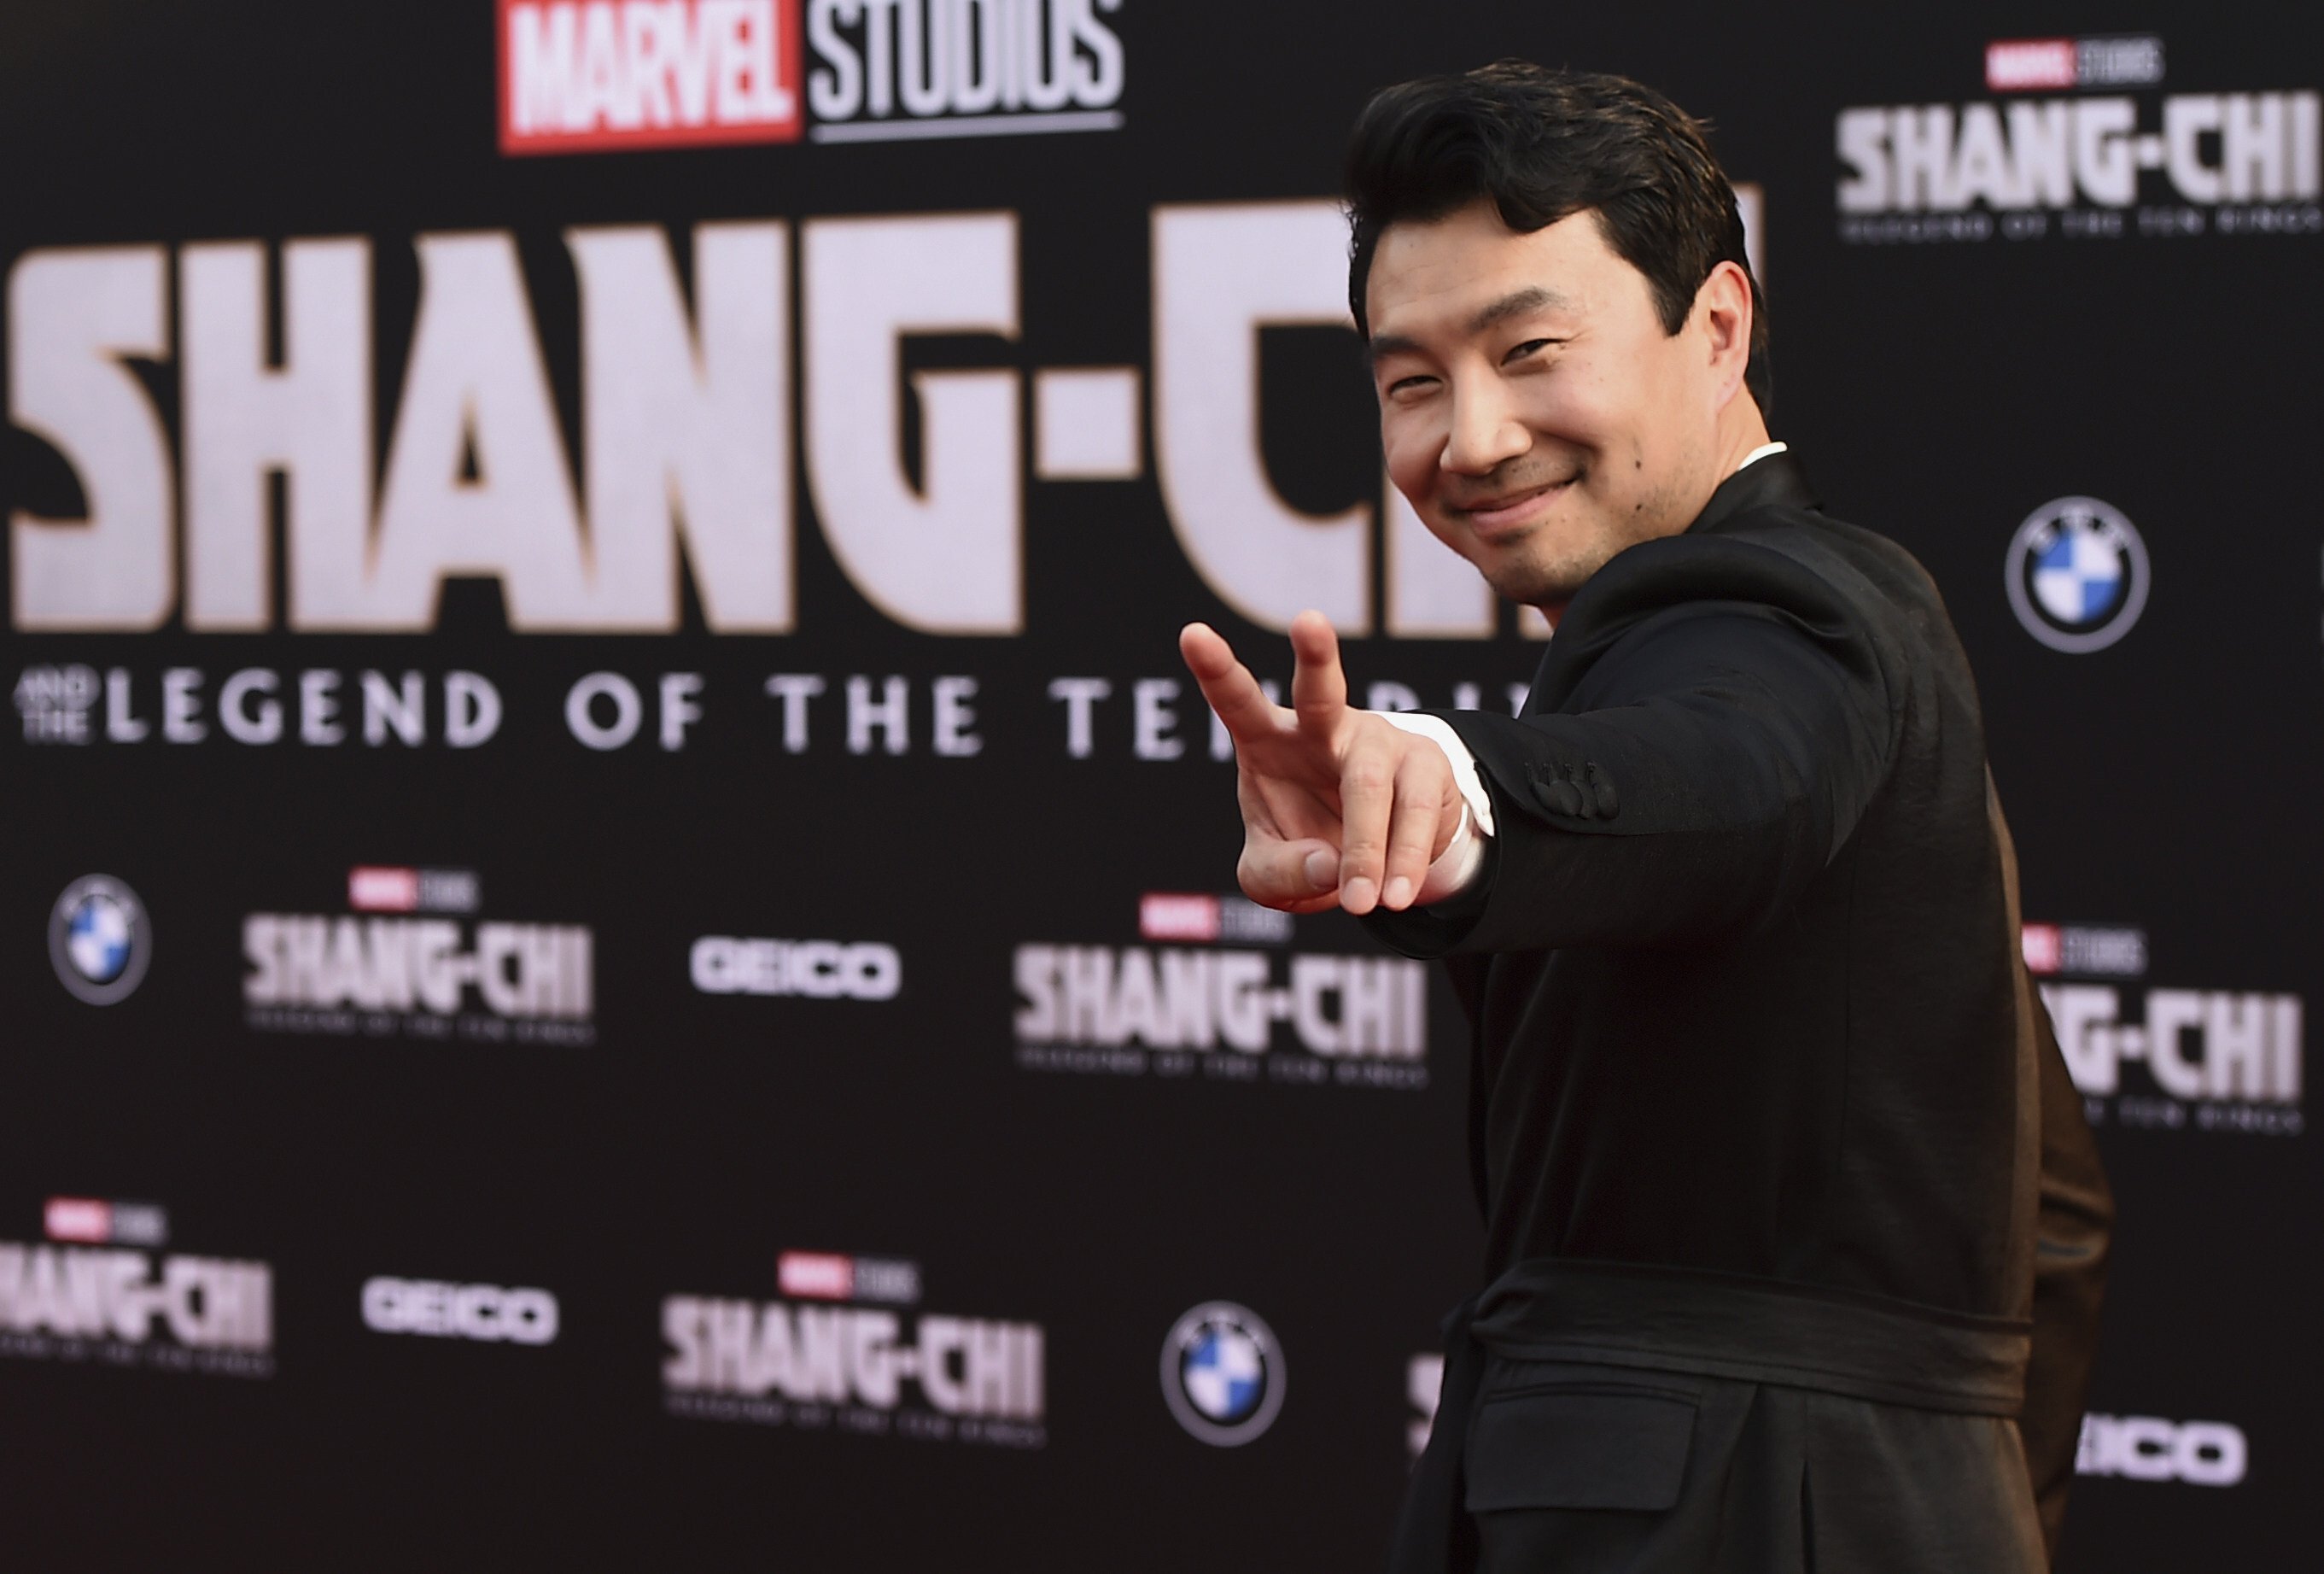 Canada's superhero Simu Liu, in Toronto for premiere of 'Shang-Chi